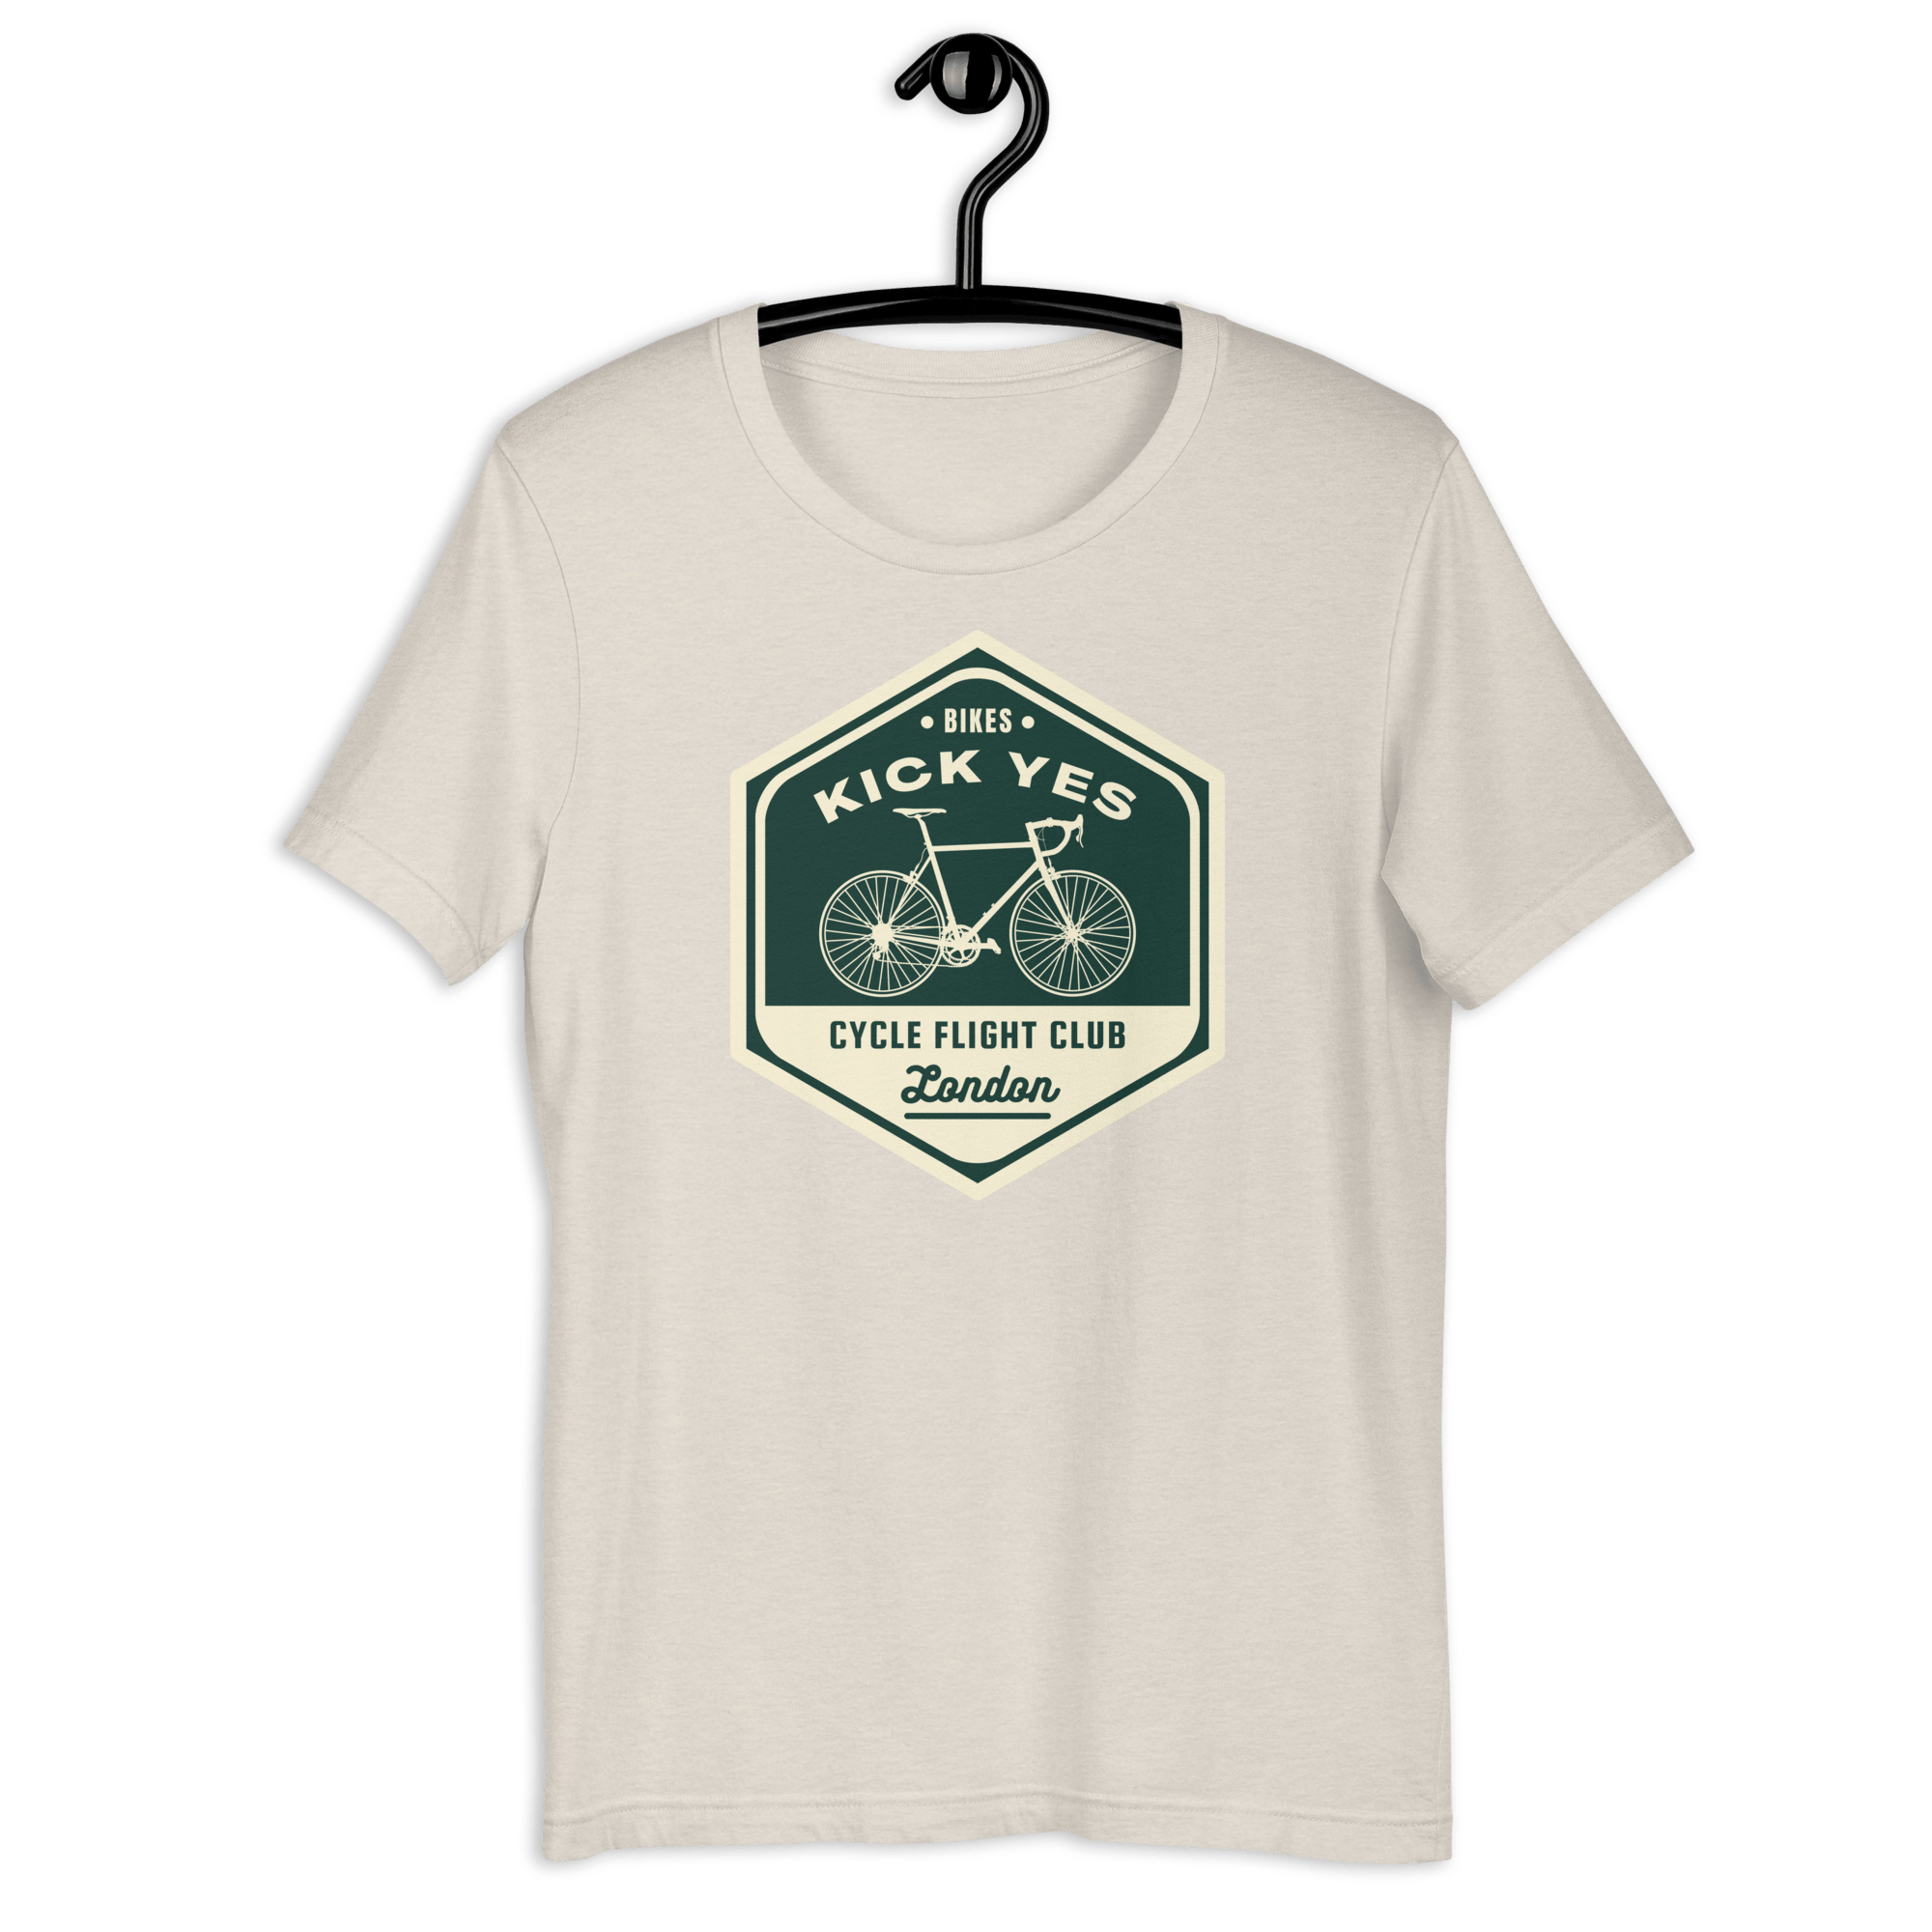 Bikes Kick Yes, Cycle Flight Club London T-shirt Heather Dust / S Shirts & Tops Jolly & Goode